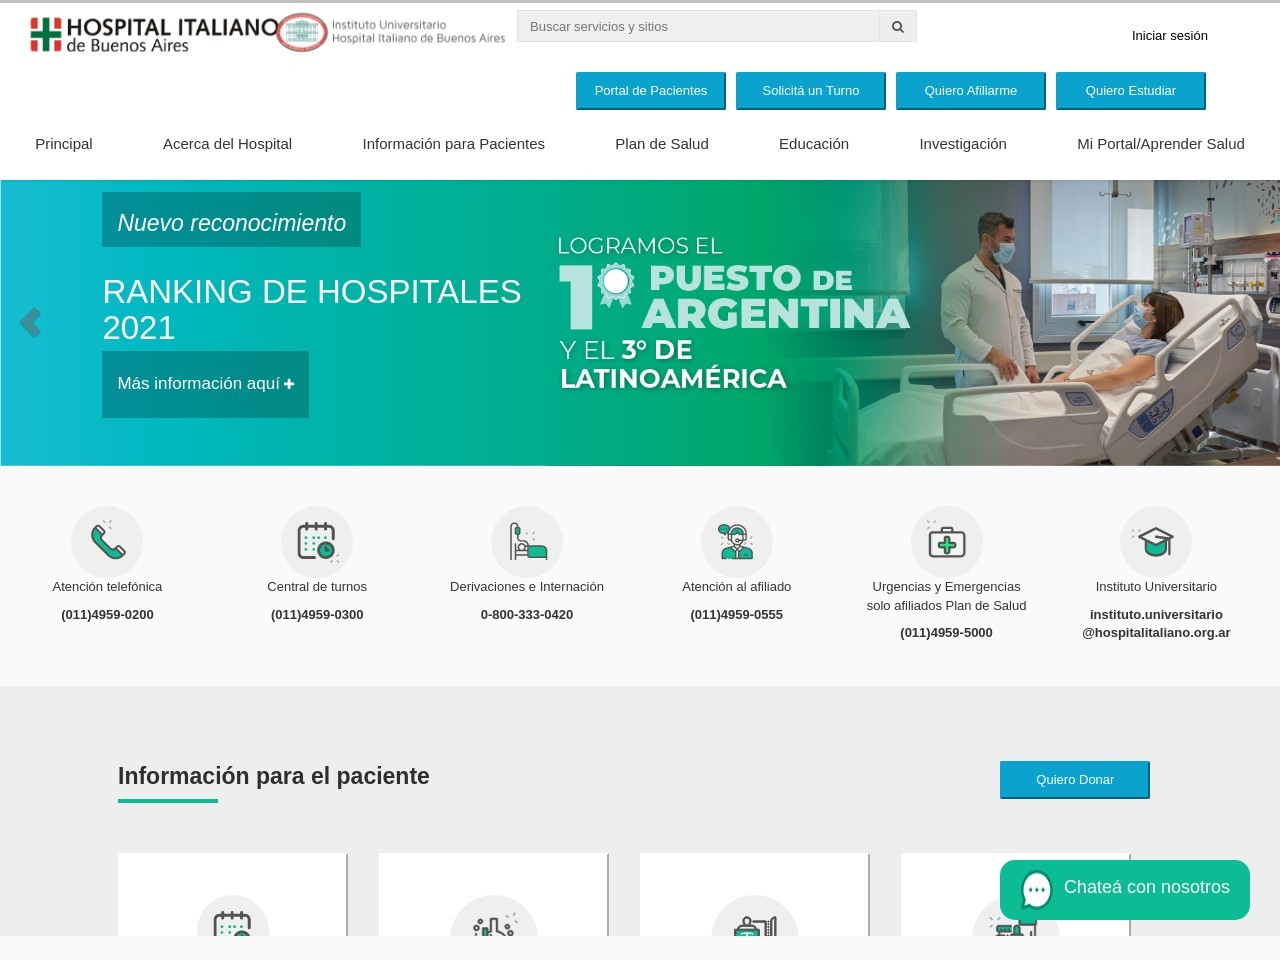 Aprender Salud / Mi Portal - Hospital Italiano